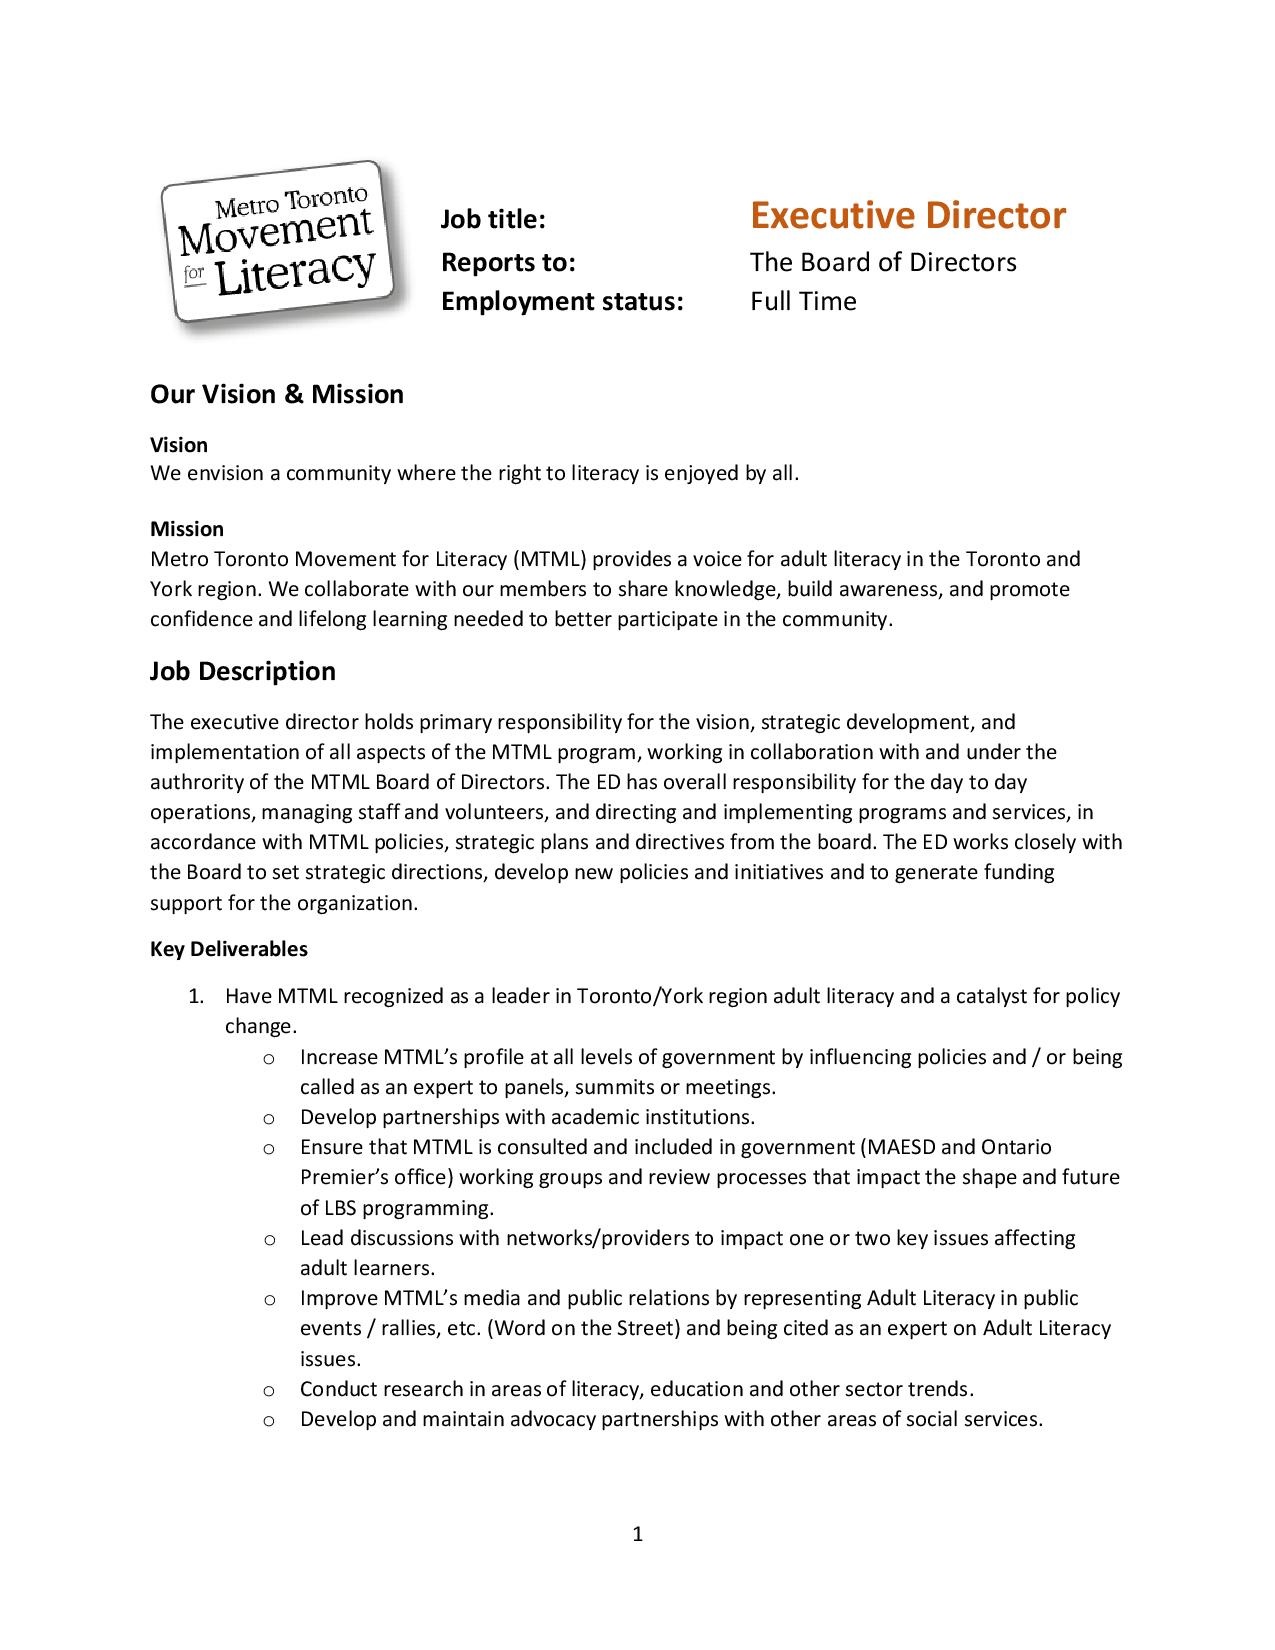 Park district executive director job description